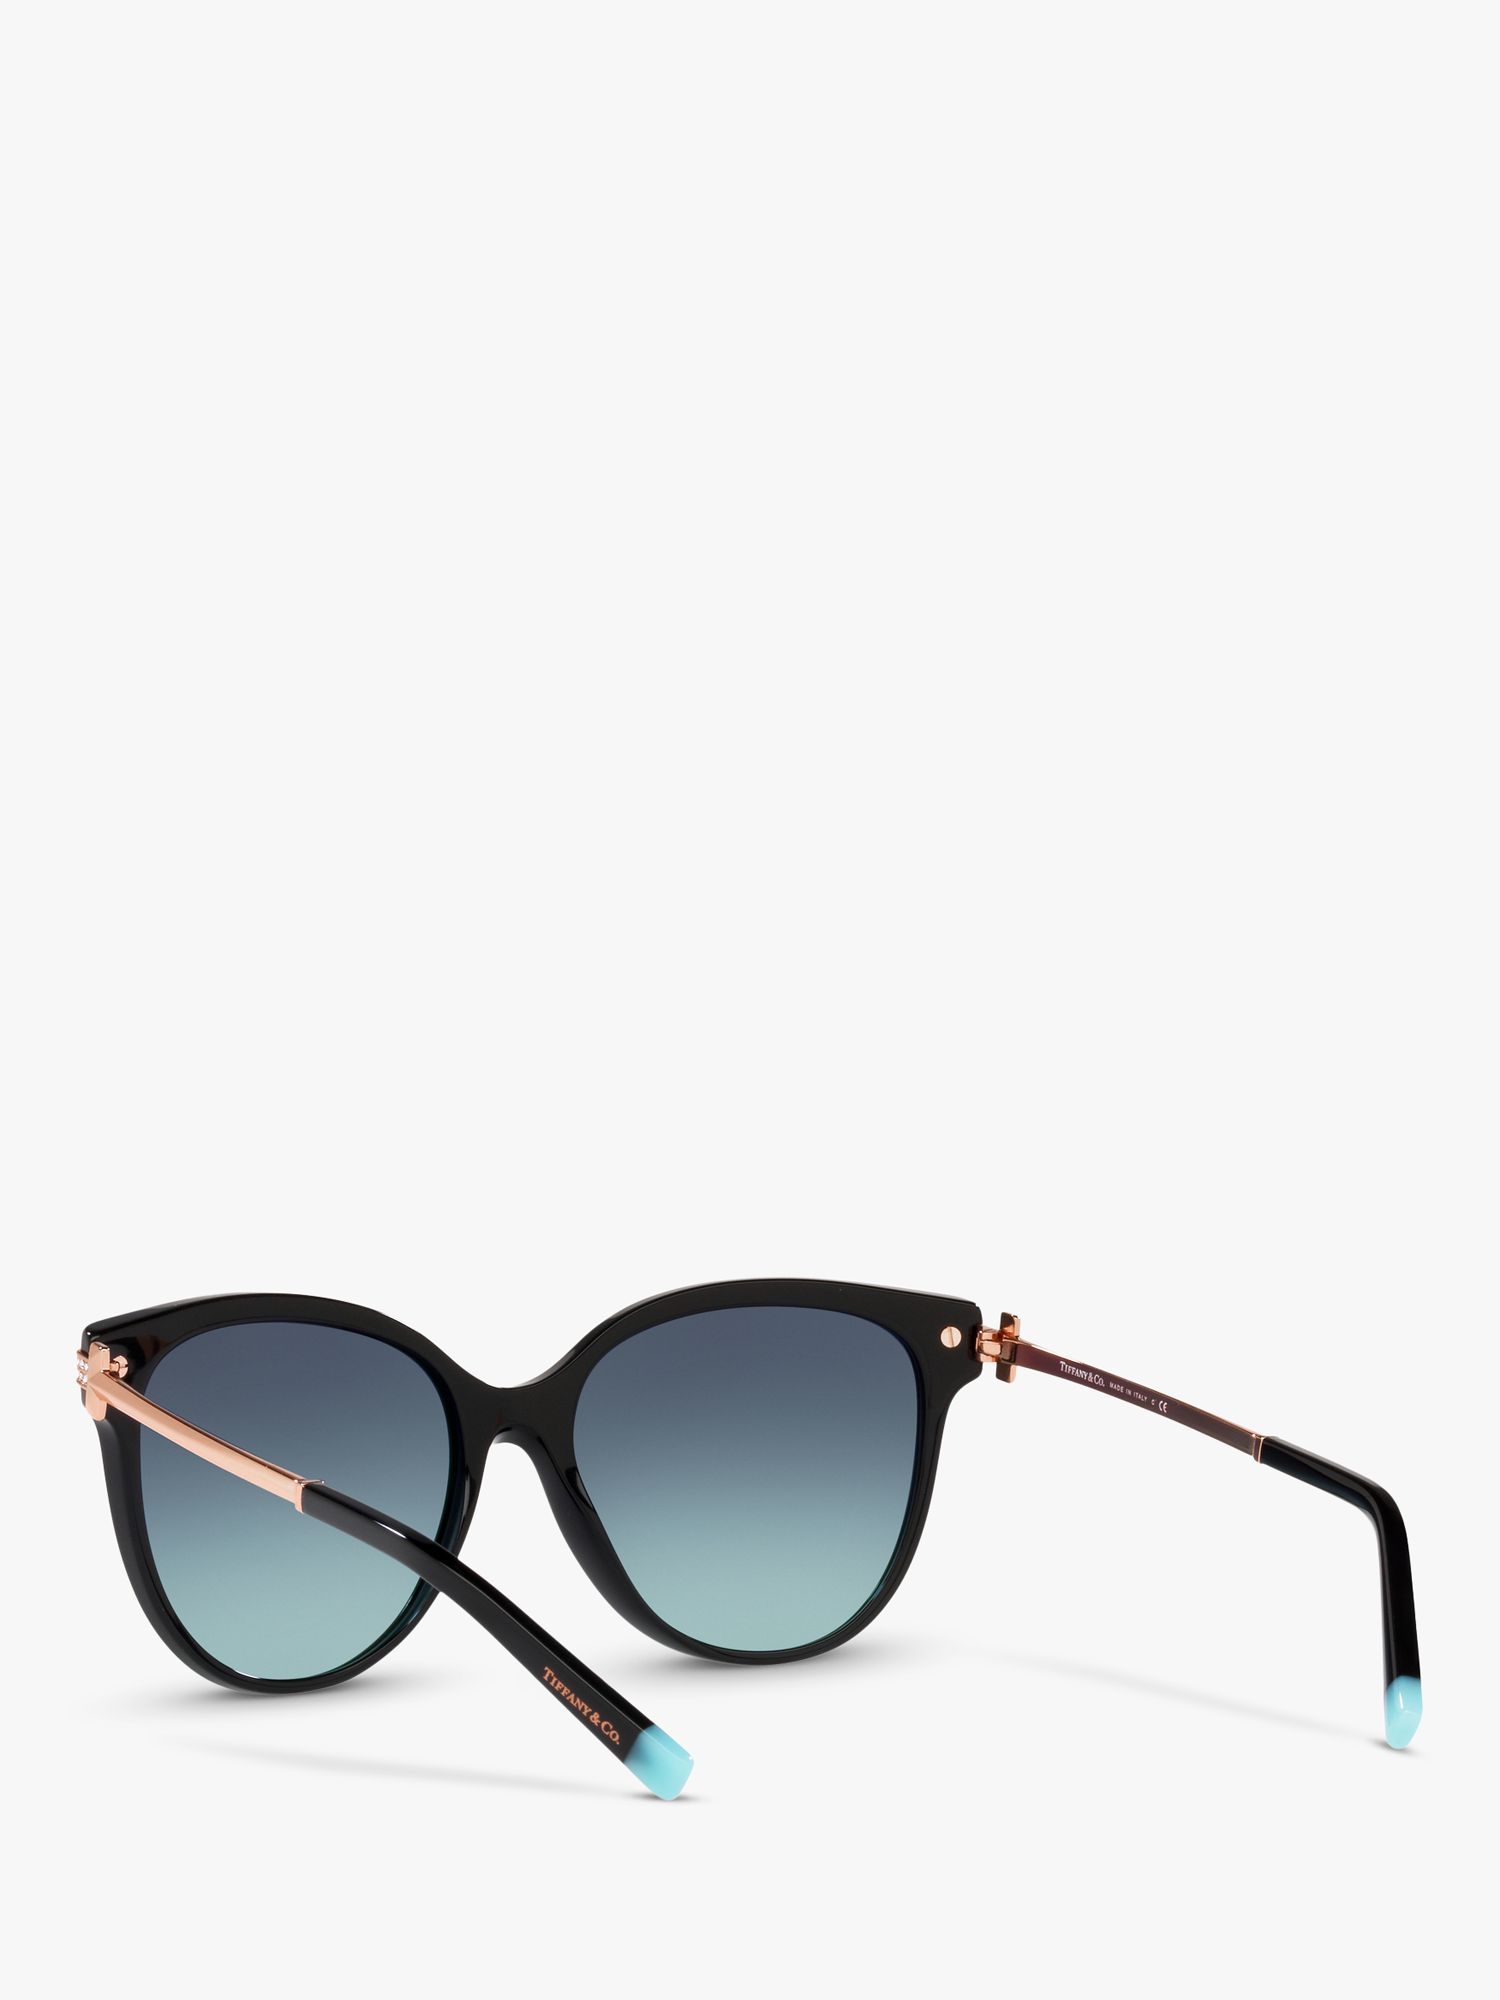 Buy Tiffany & Co TF4193B Women's Oval Sunglasses, Black/Blue Gradient Online at johnlewis.com